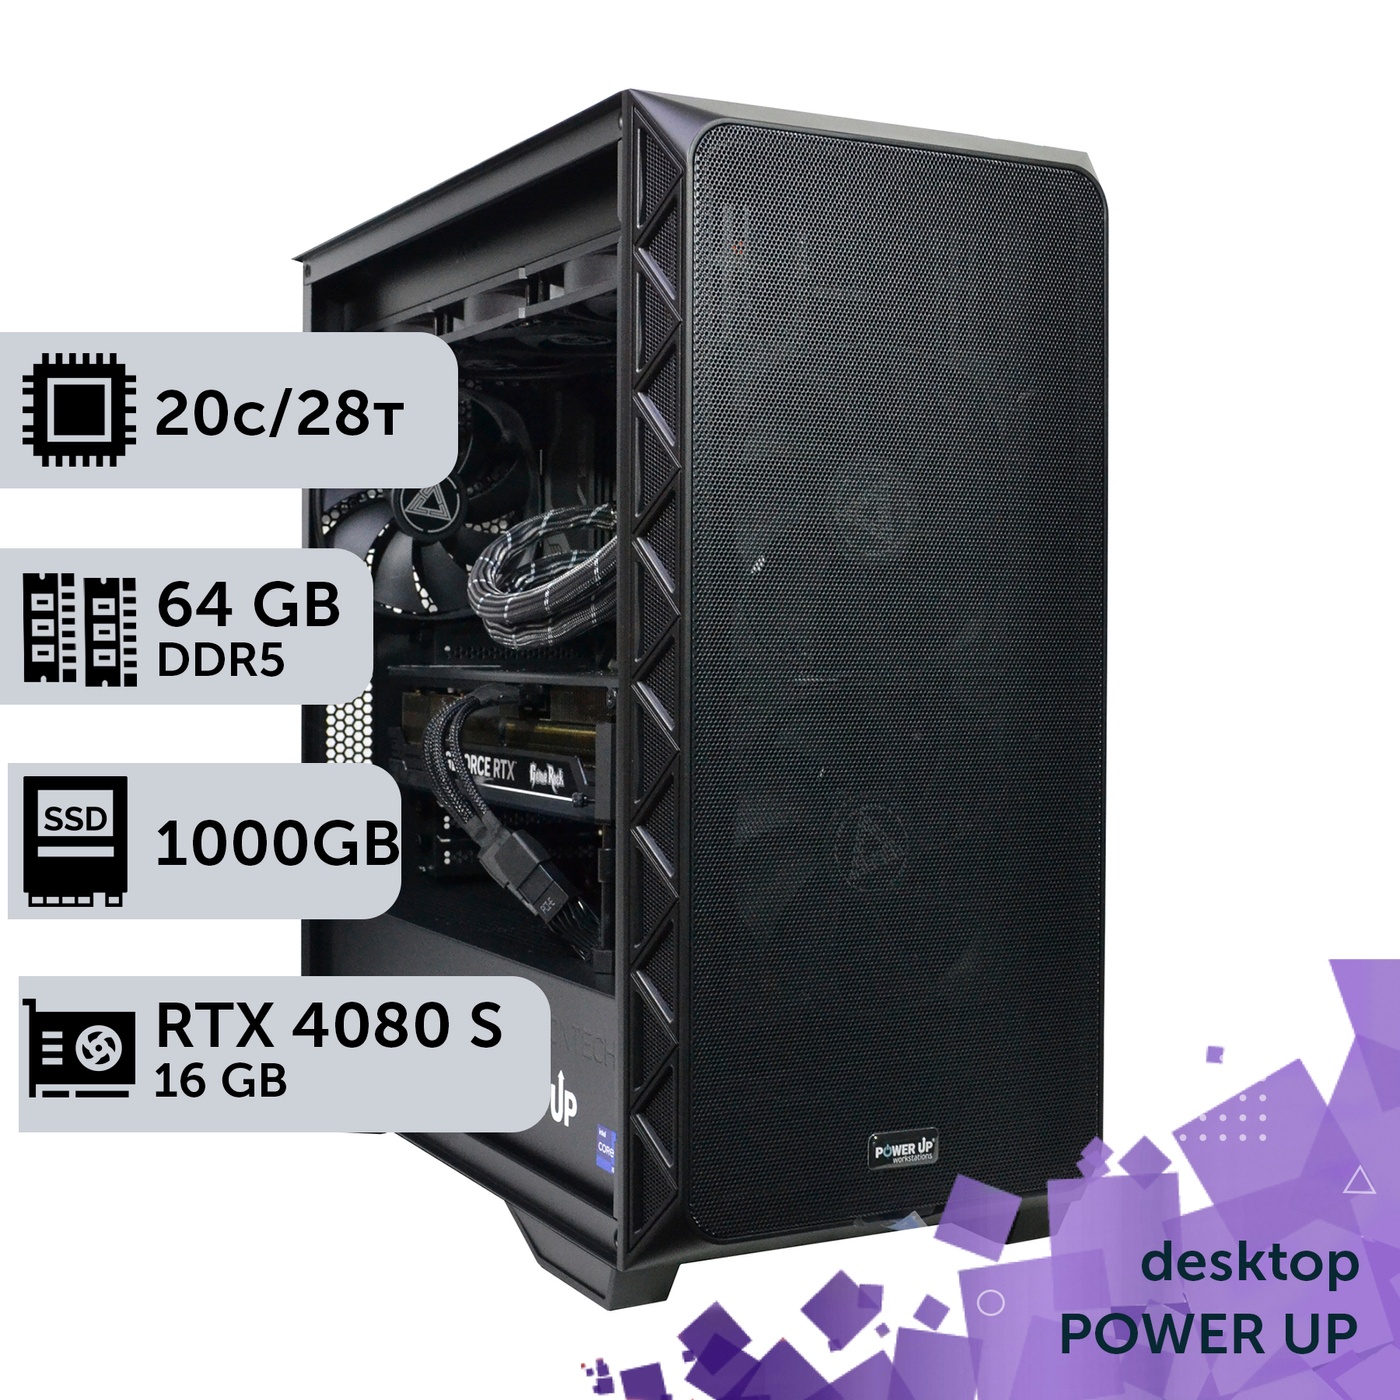 Рабочая станция PowerUp Desktop #370 Core i7 14700K/64 GB/SSD 1TB/GeForce RTX 4080 Super 16GB